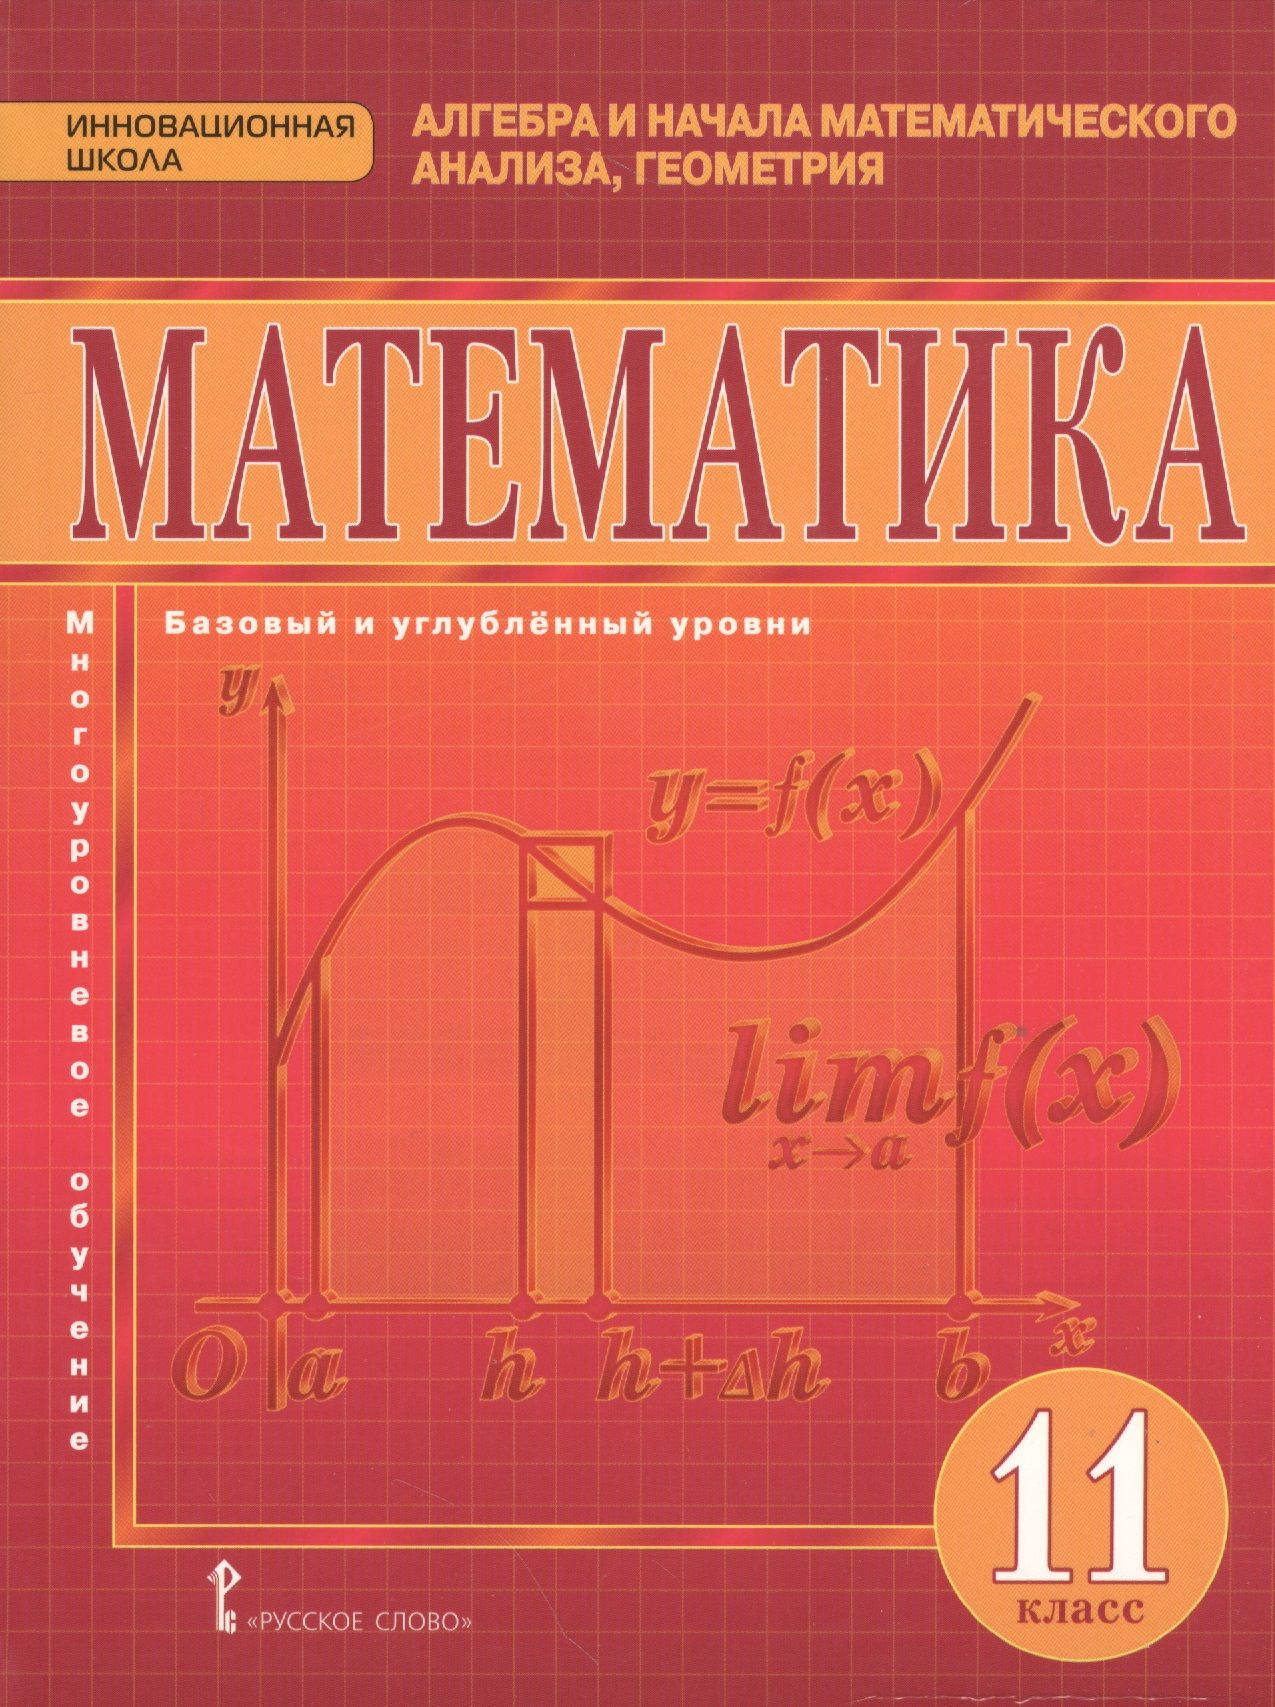 Читать математику 11 класс. Математика 11 класс учебник. Математика Алгебра и начала математического анализа геометрия. Математические книги. Учебник Алгебра математика.